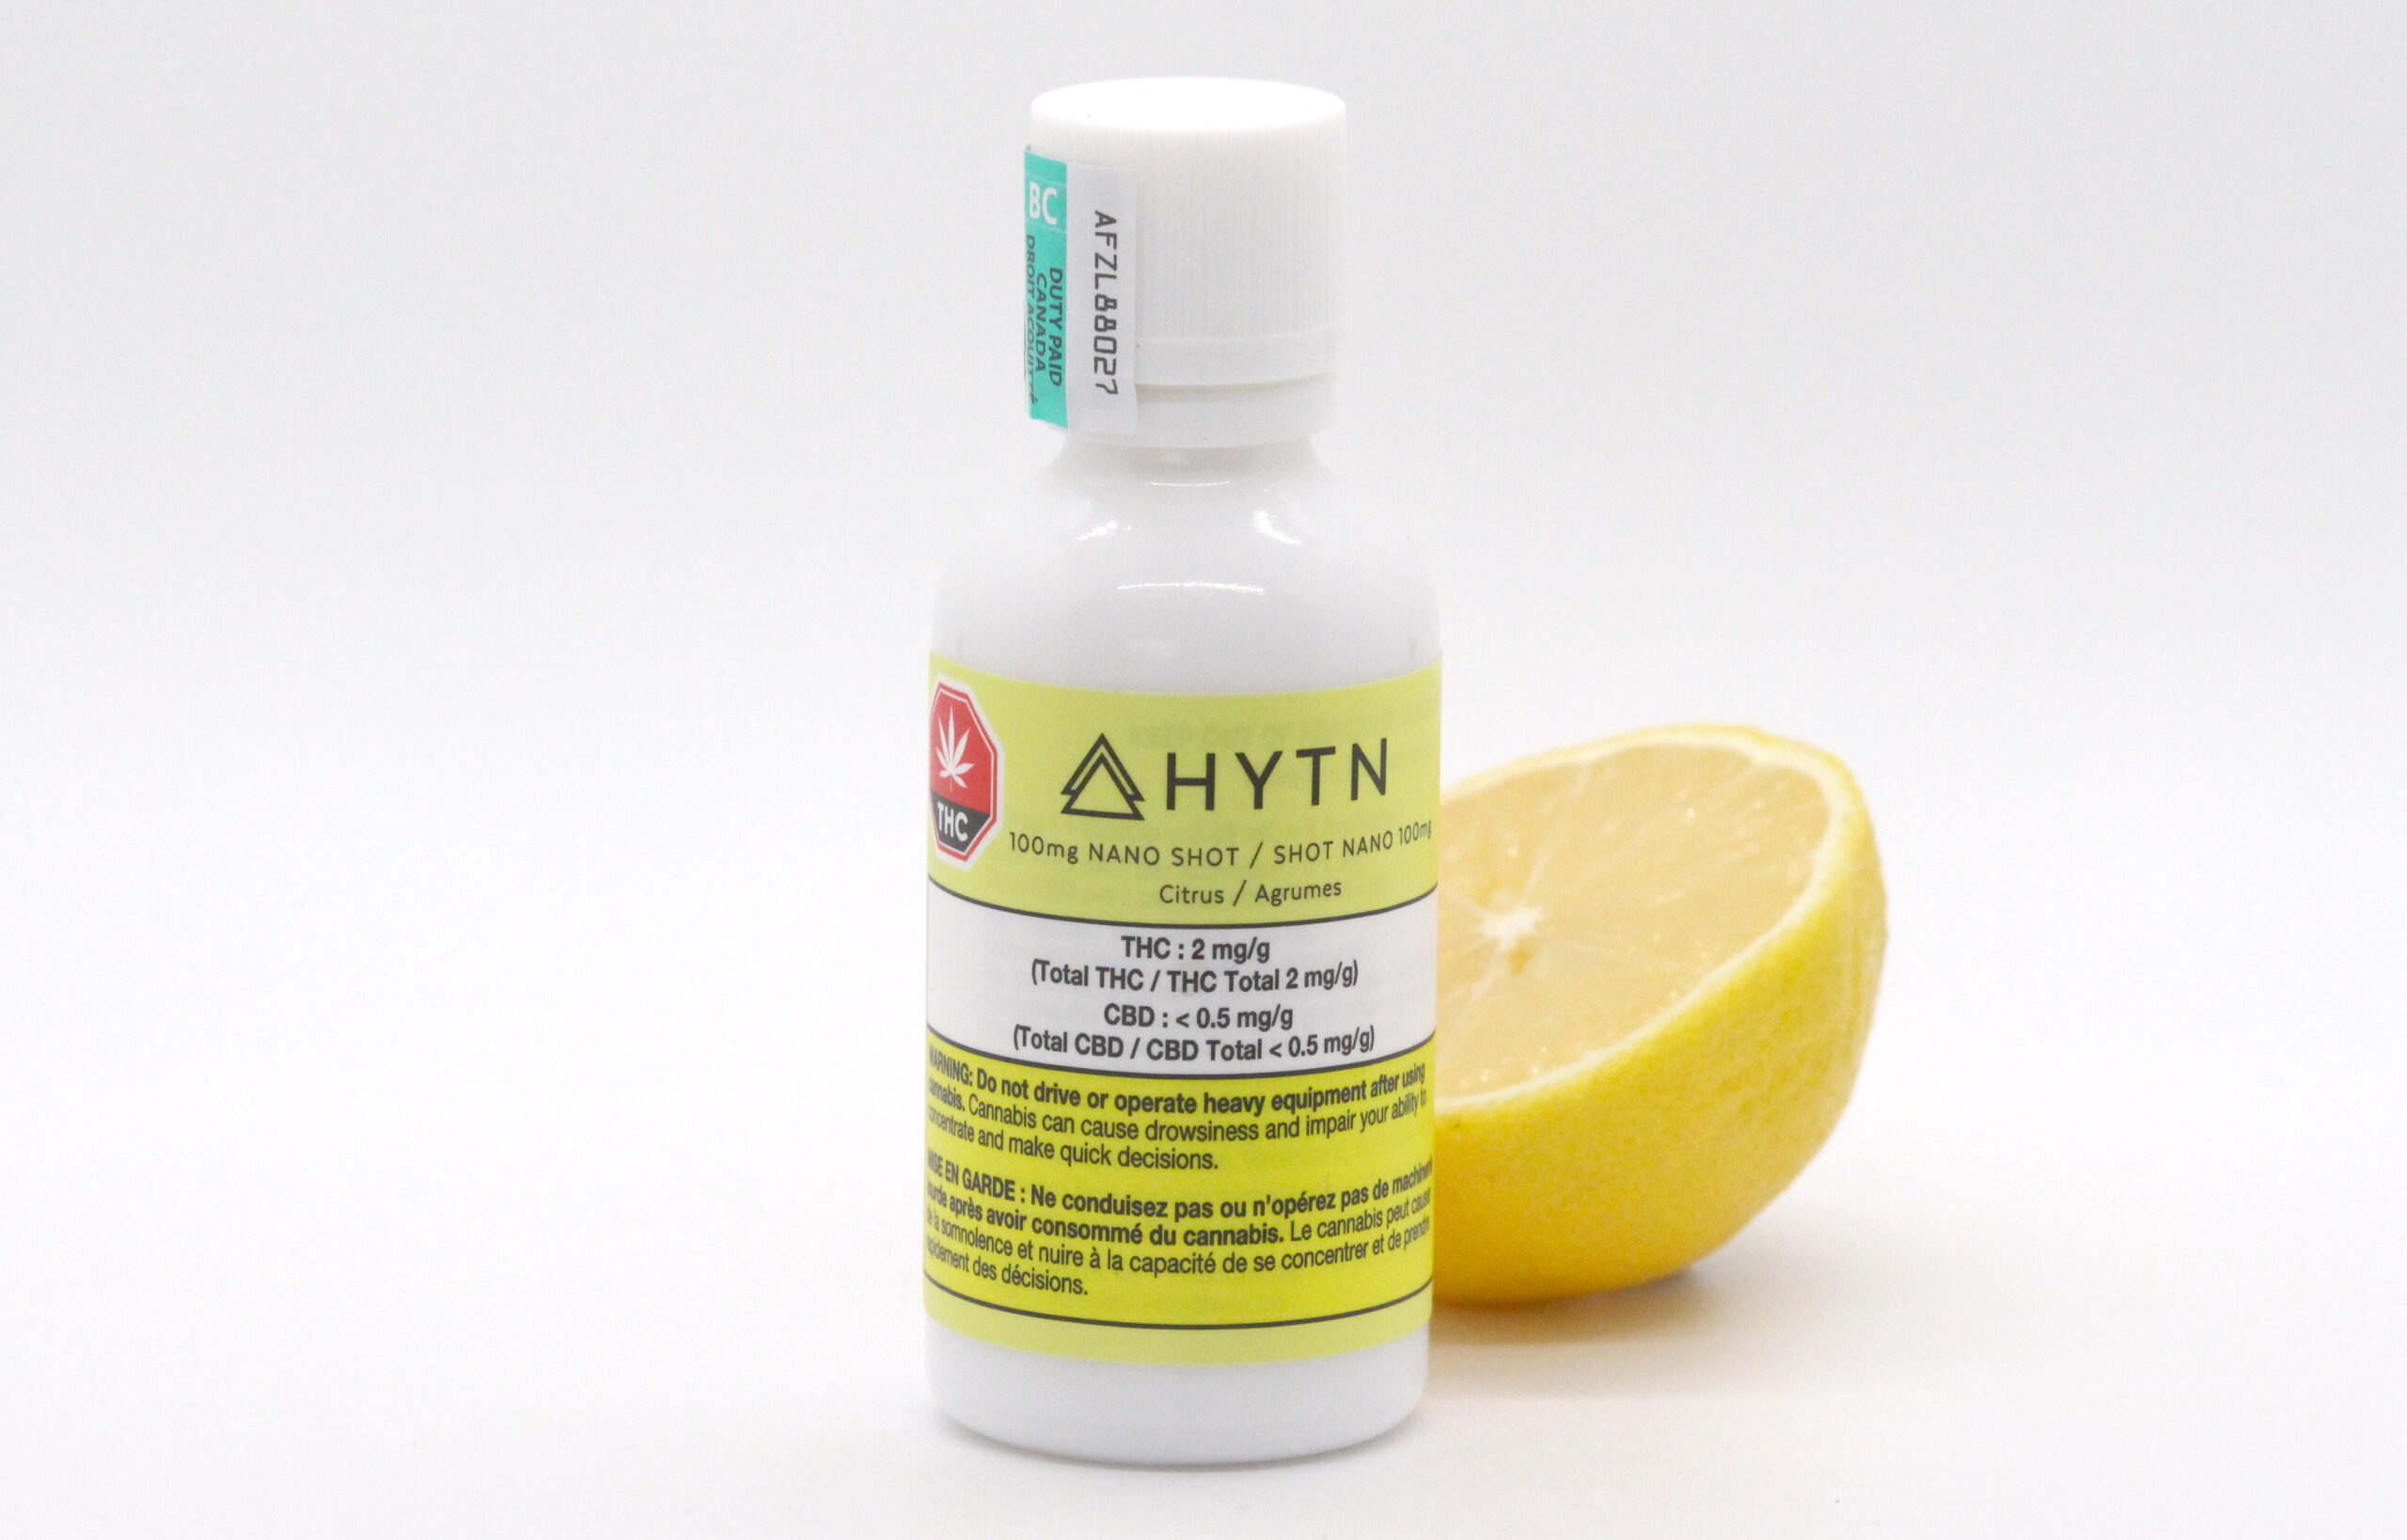 A bottle of 100mg Nano Shot by HYTN with a halved lemon.